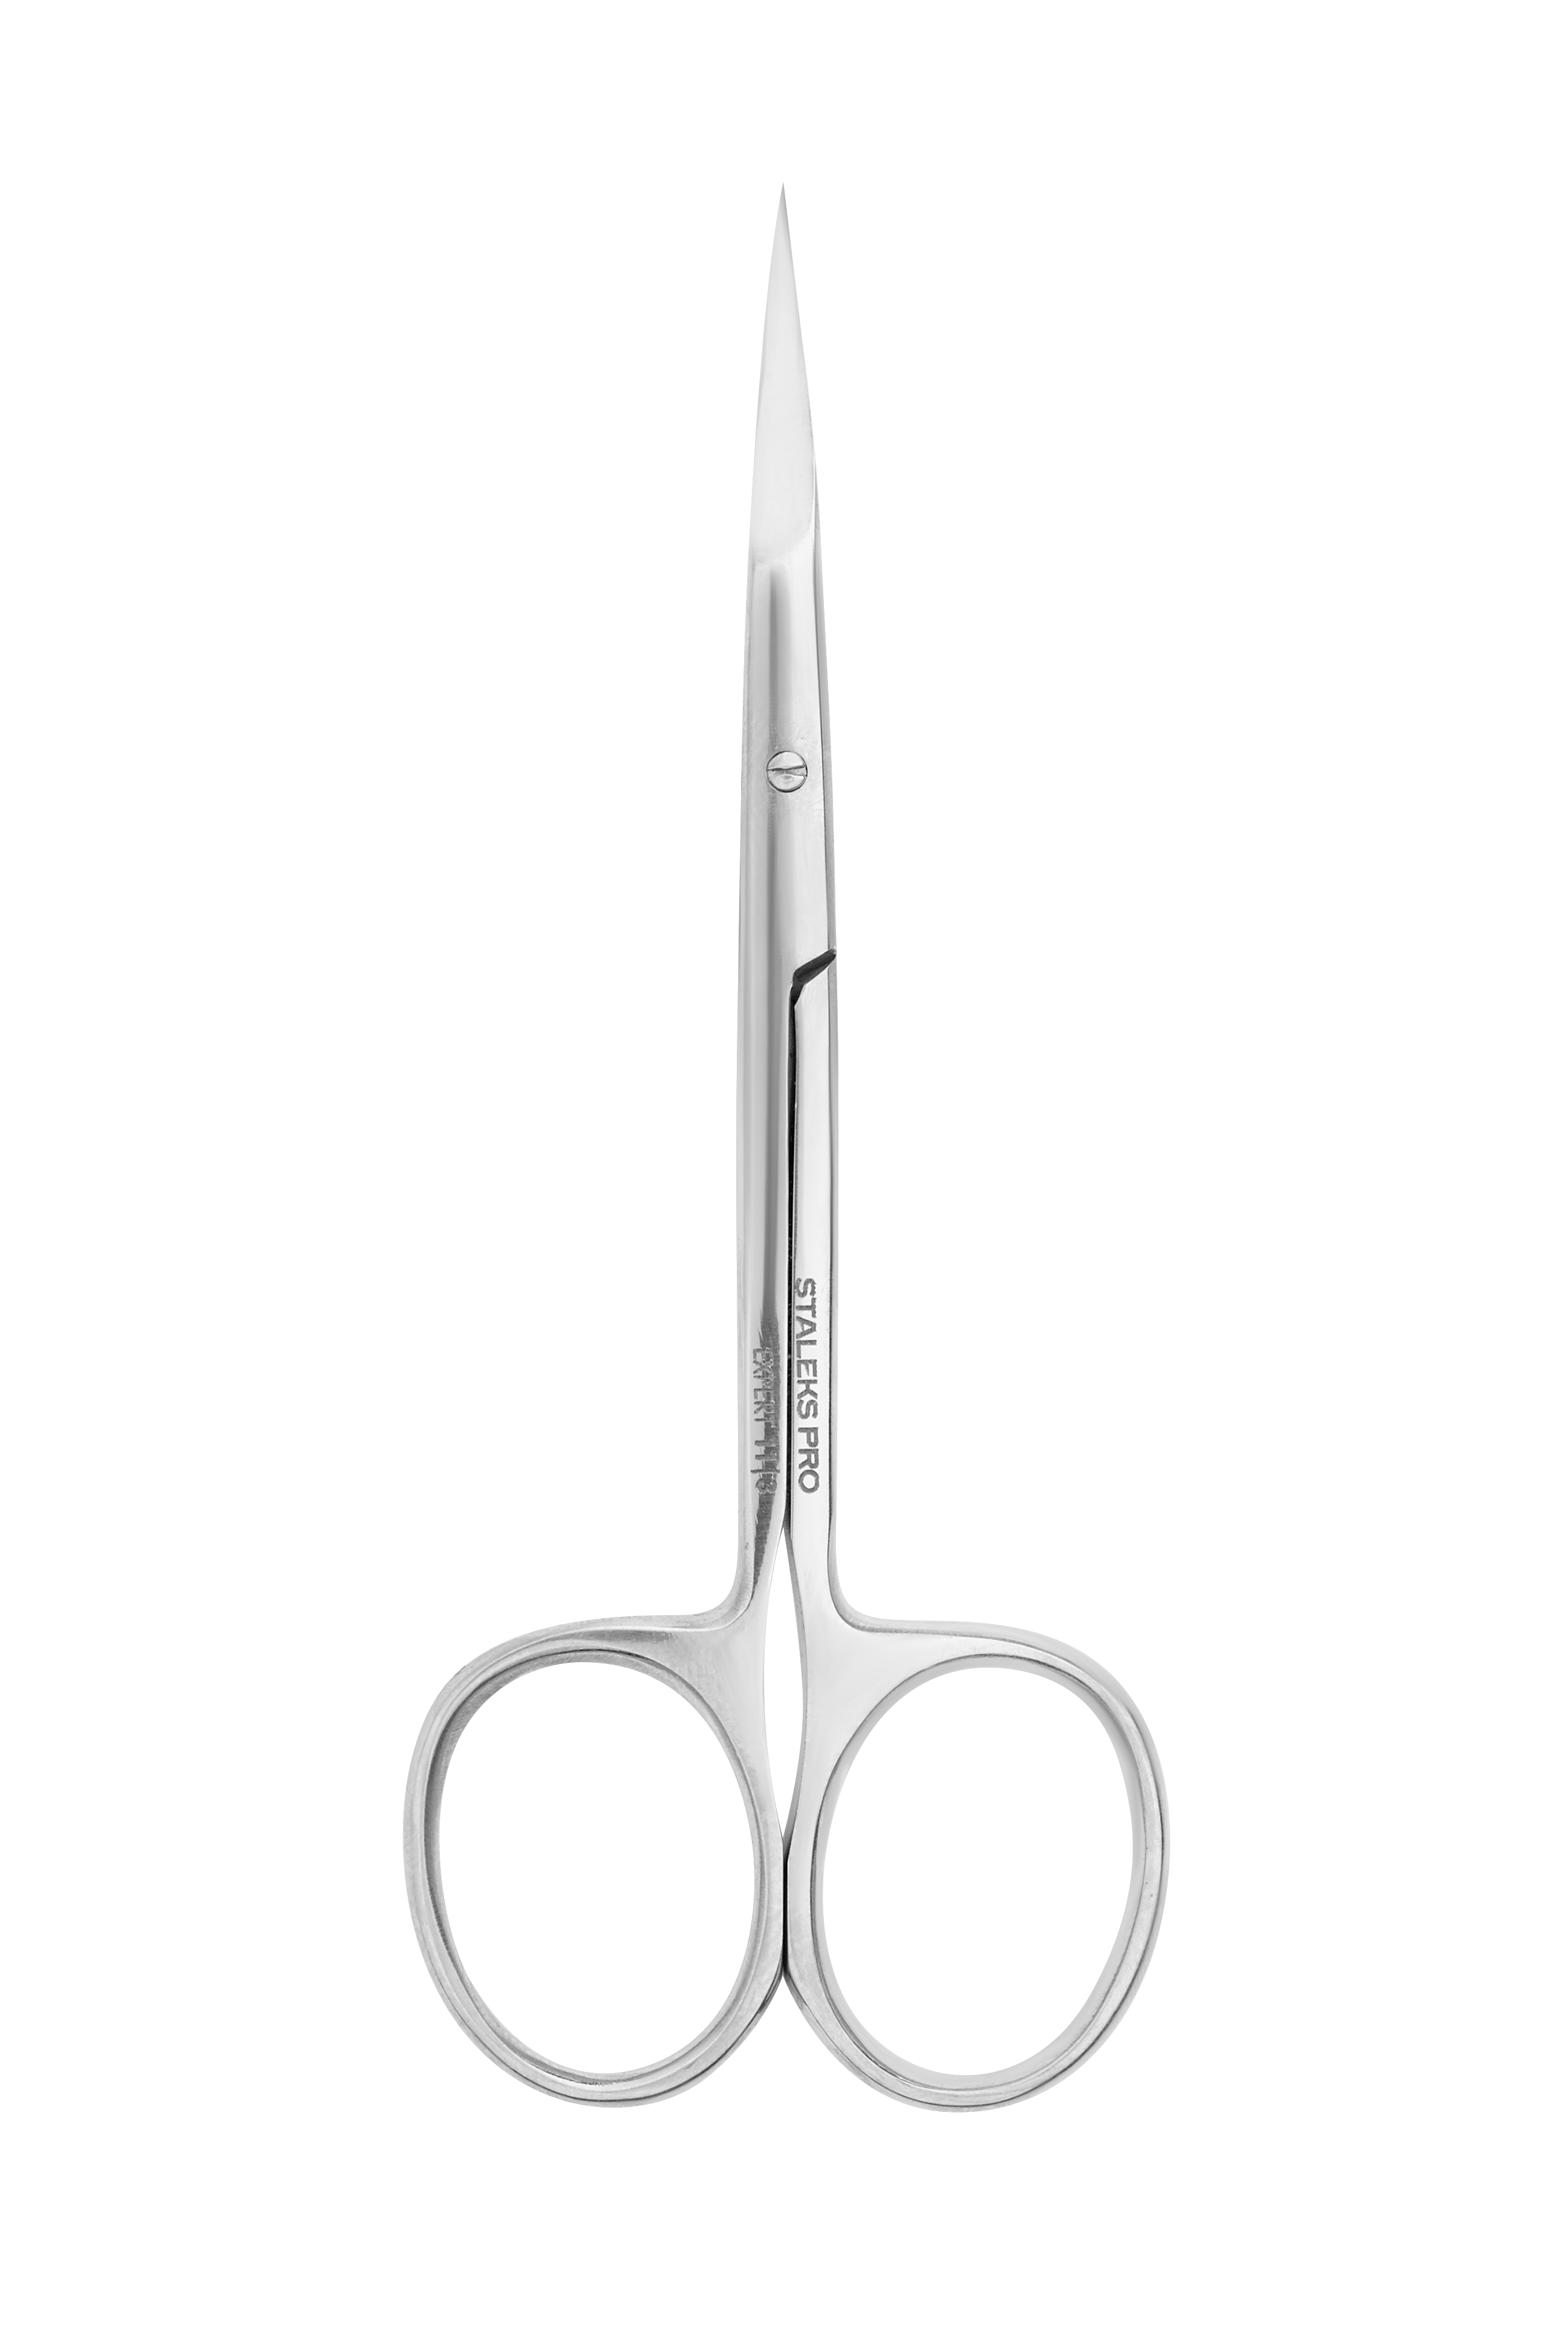 Staleks Professional cuticle scissors left handed